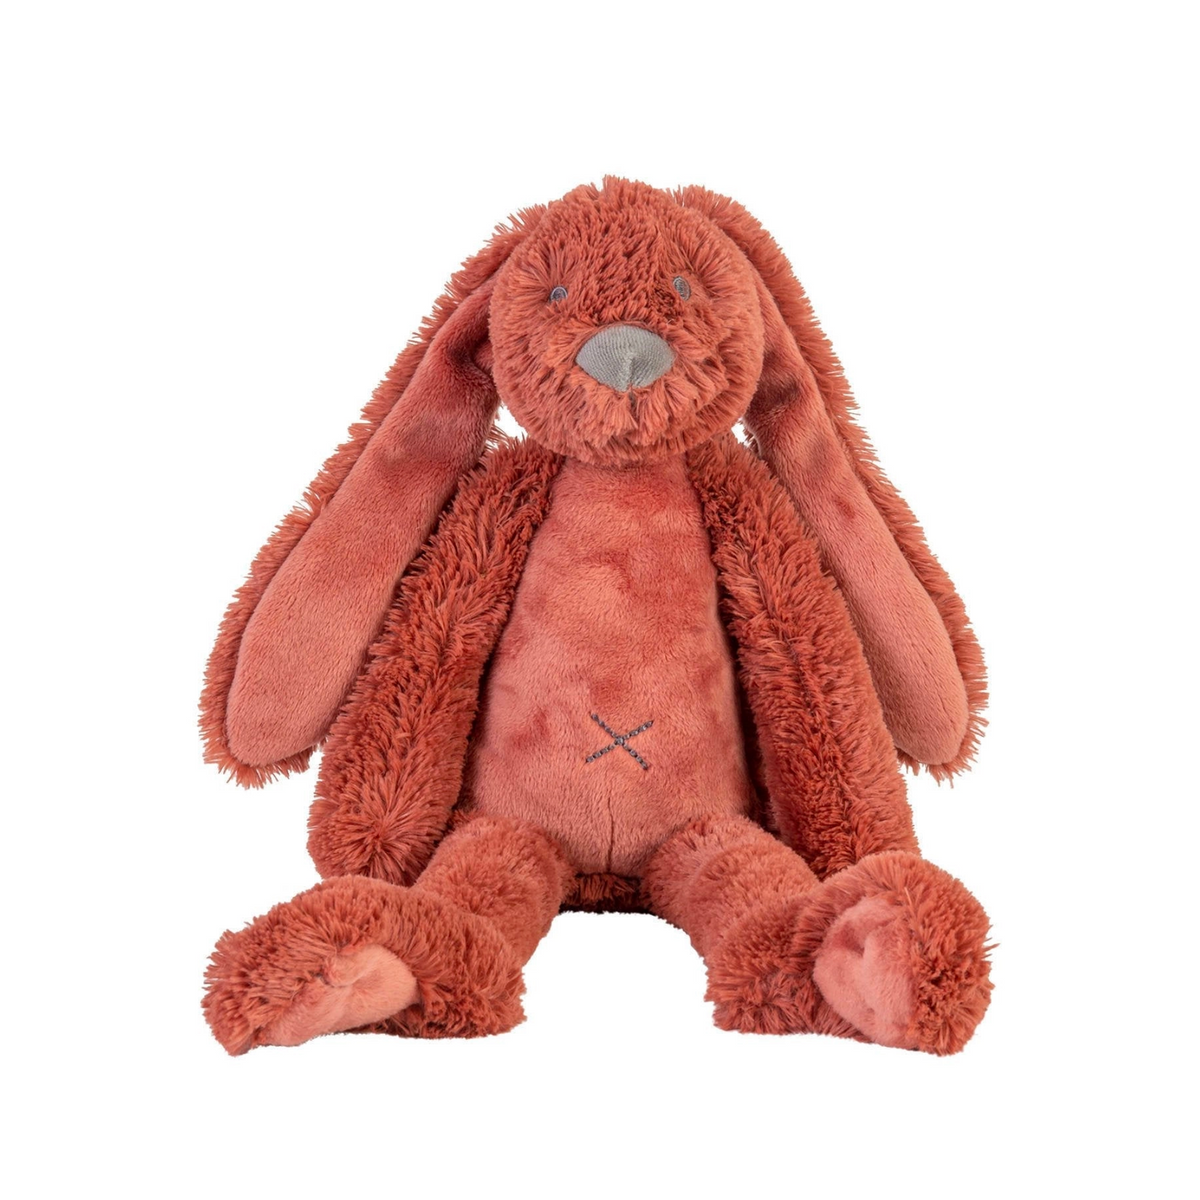 Rusty Rabbit Plush Stuffed Animal